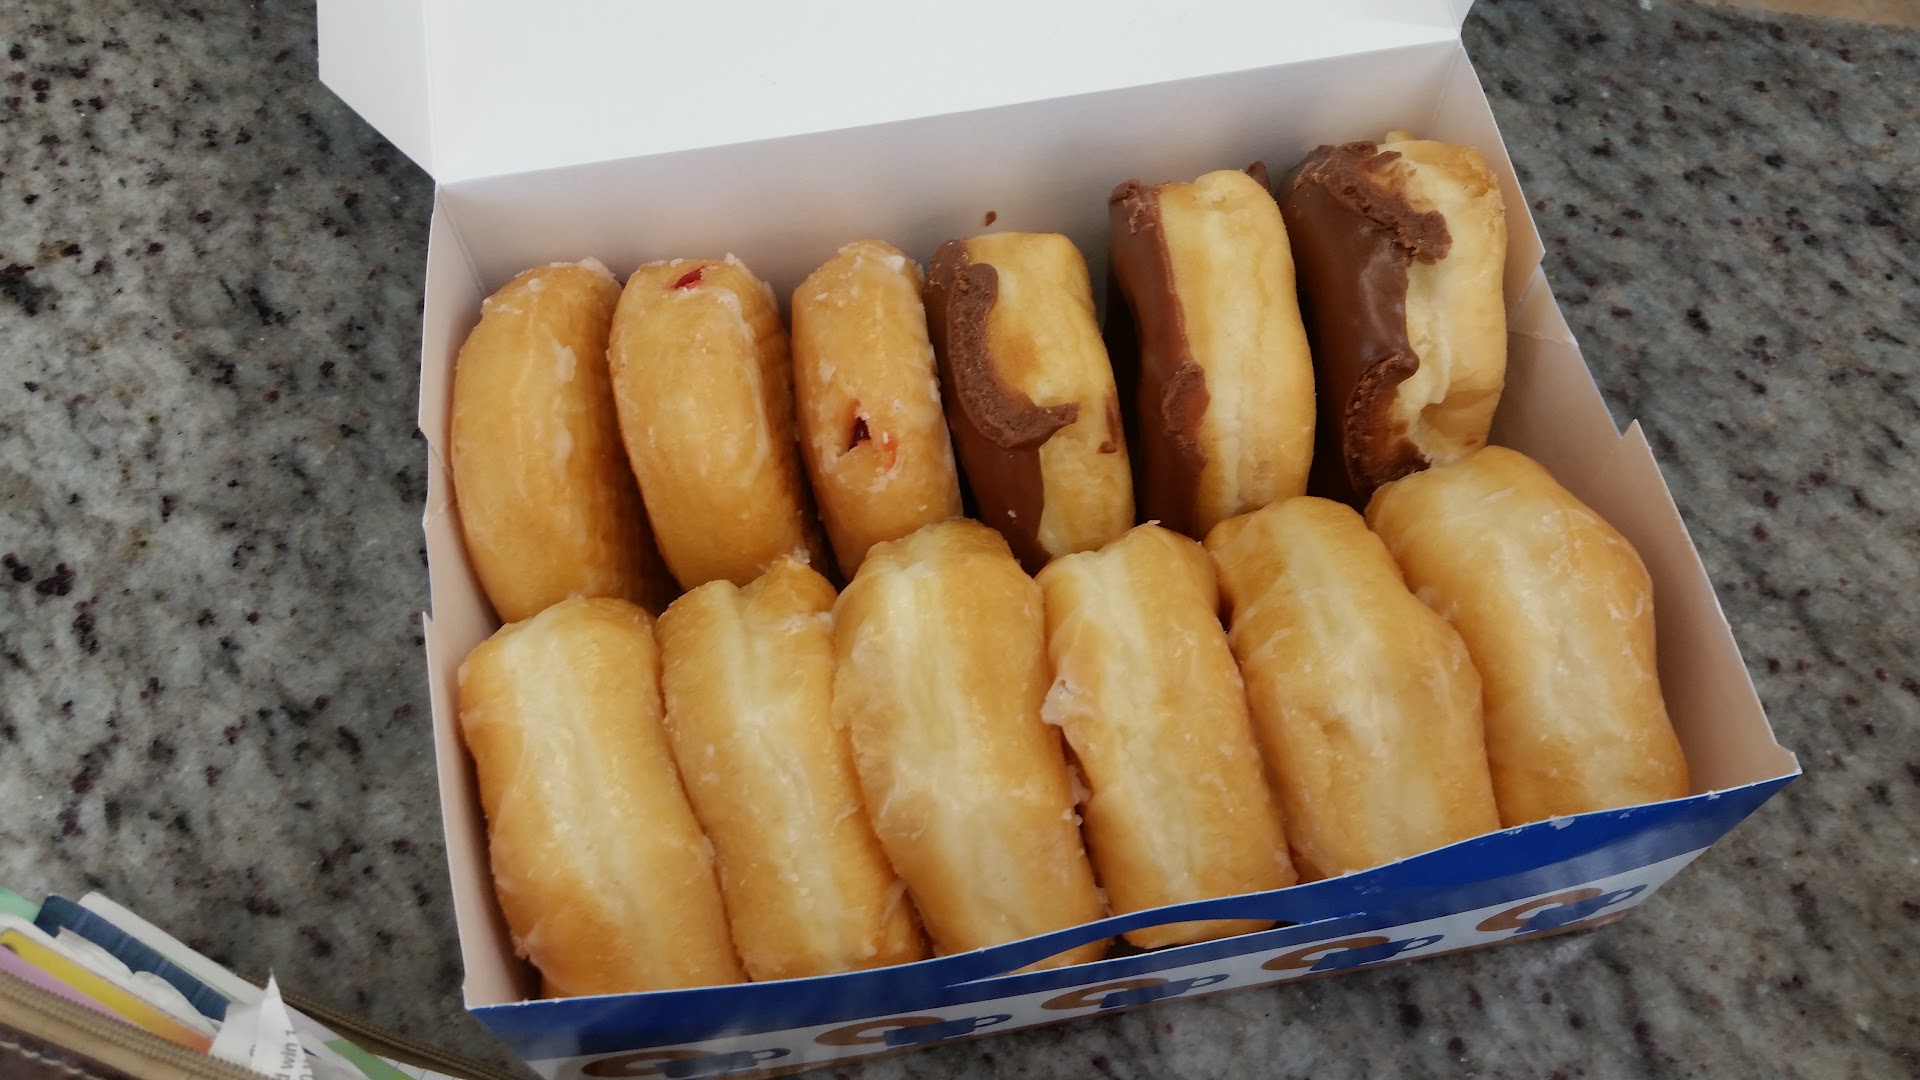 Mary Lee Donuts in Baton Rouge (Photos, Menu, Reviews & Ratings)